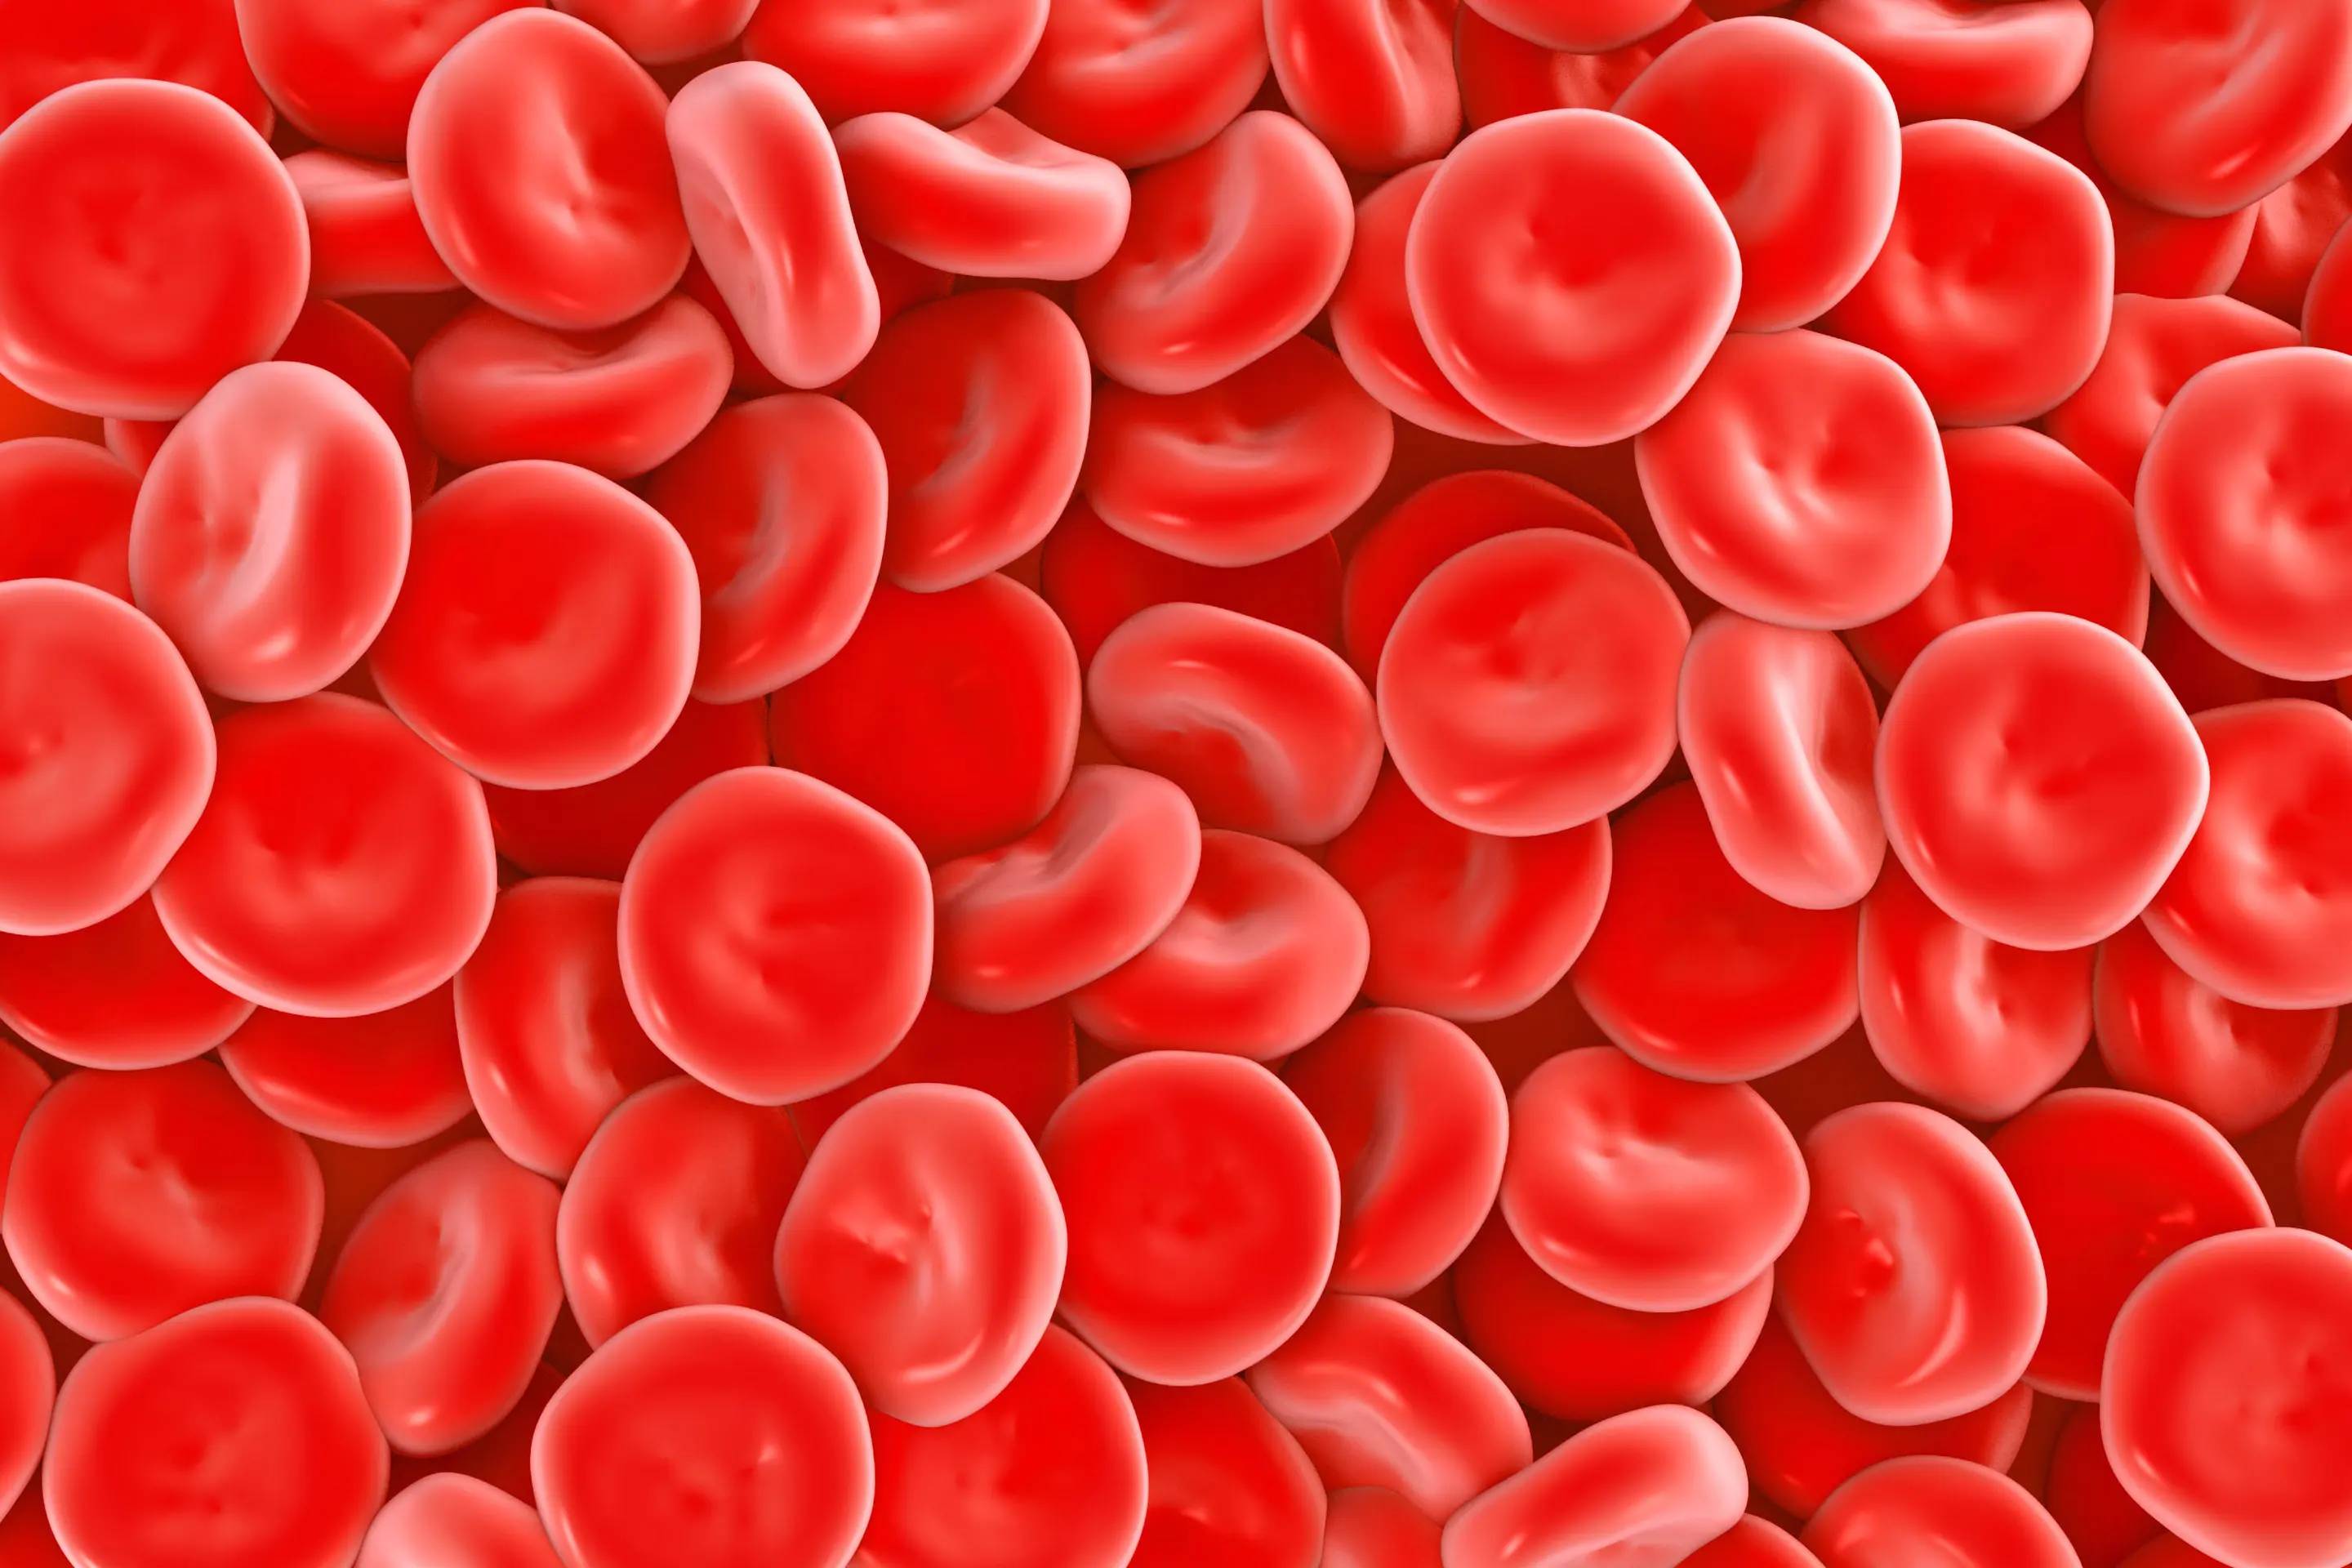 red blood cells 63ef2995c443b1e7243bb55b